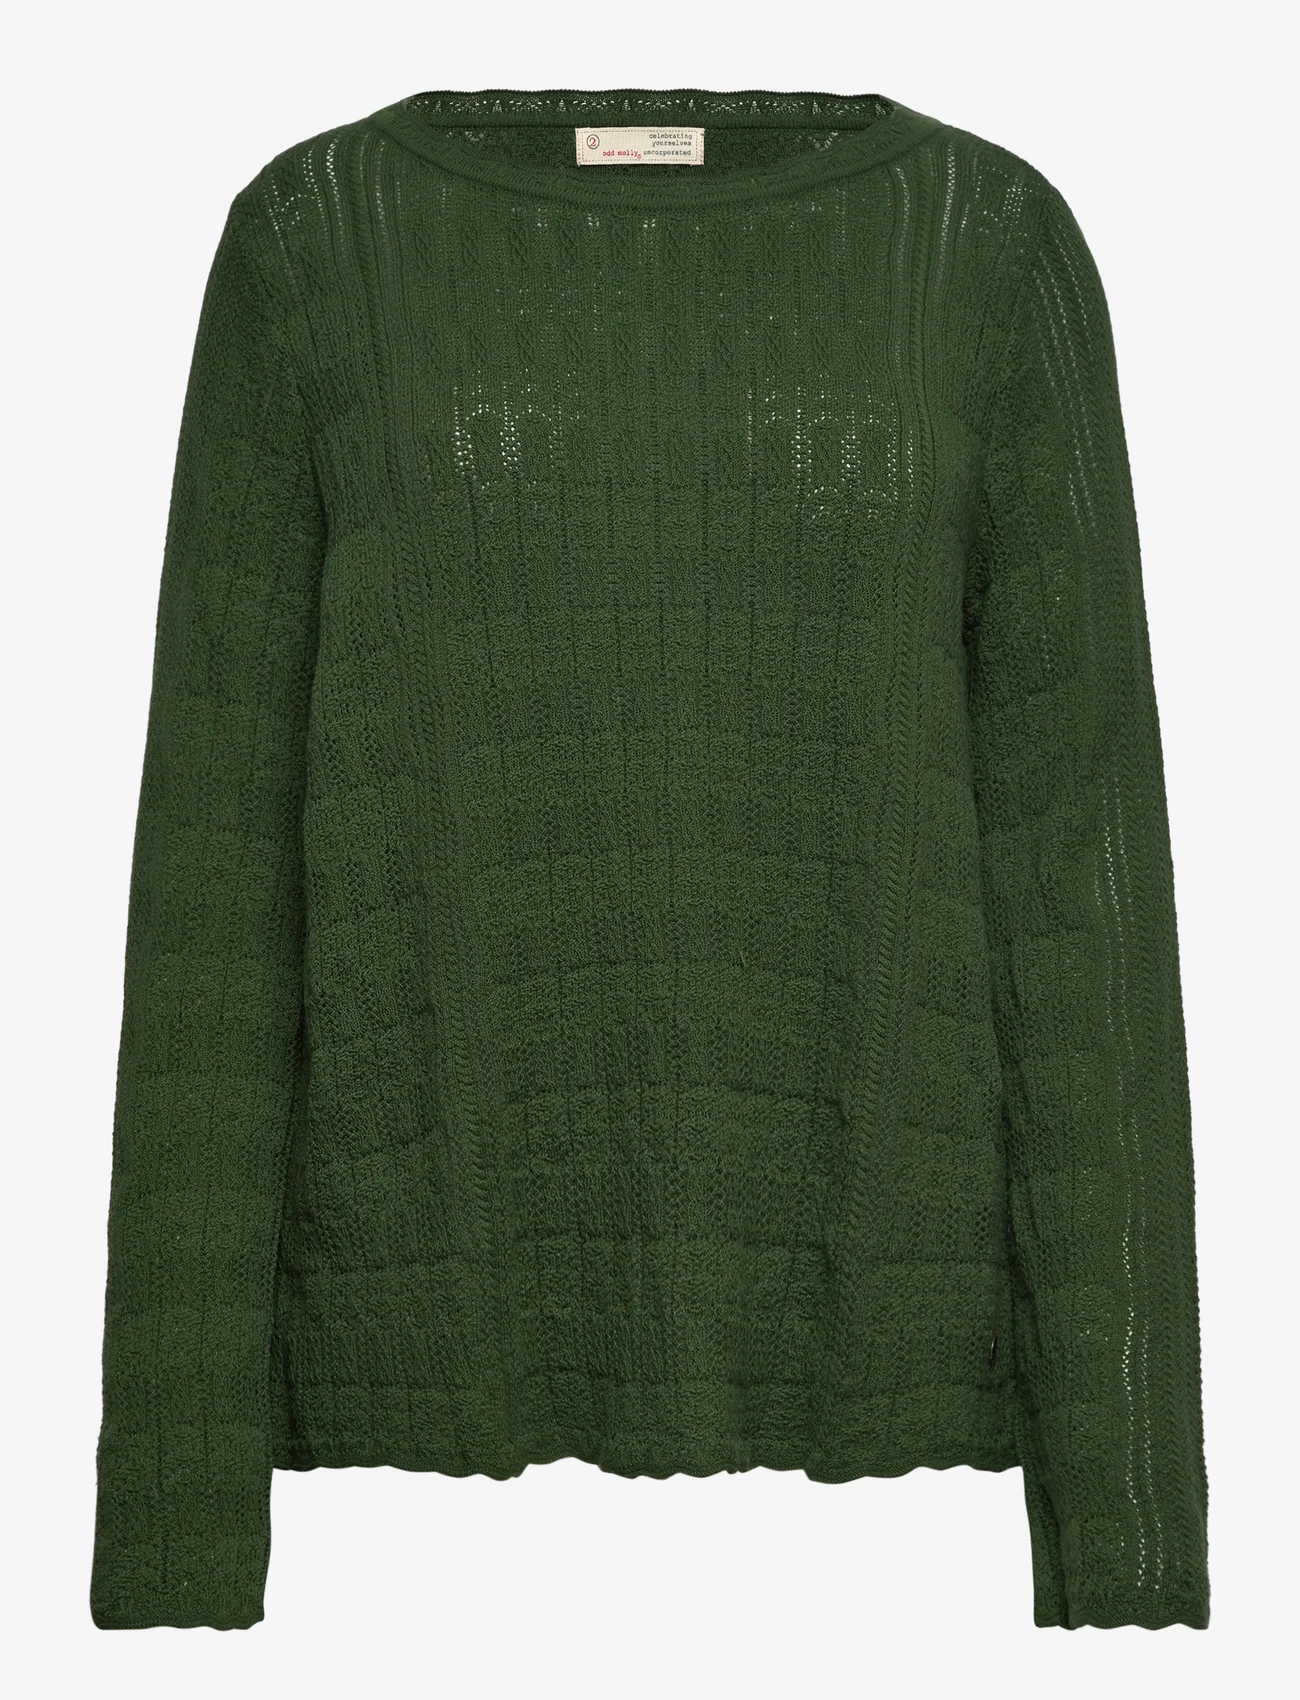 ODD MOLLY - Eden Sweater - gensere - favorite green - 0